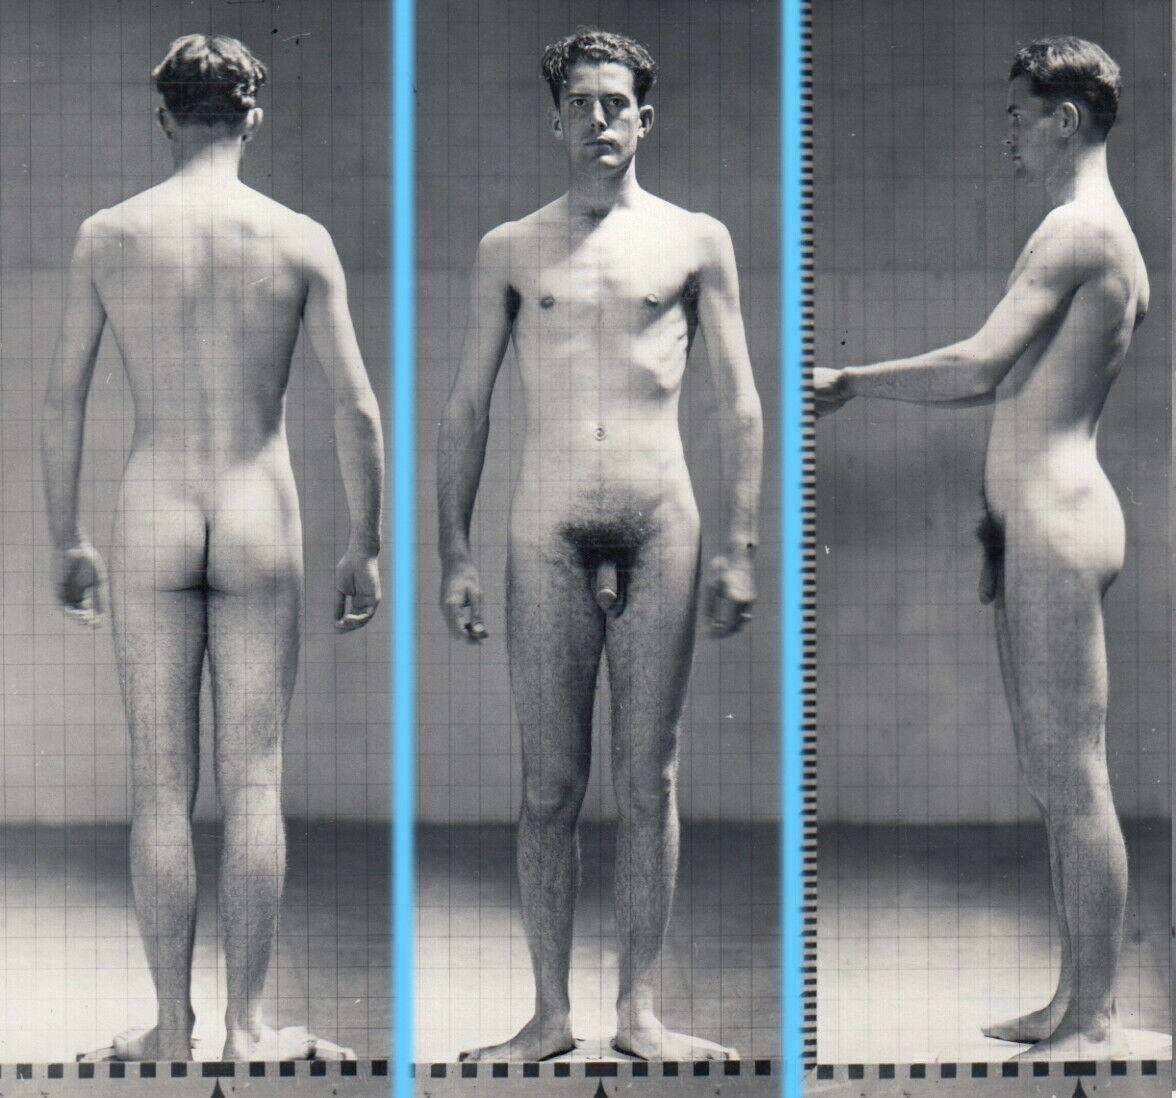 Navy men naked physical exam photos. 